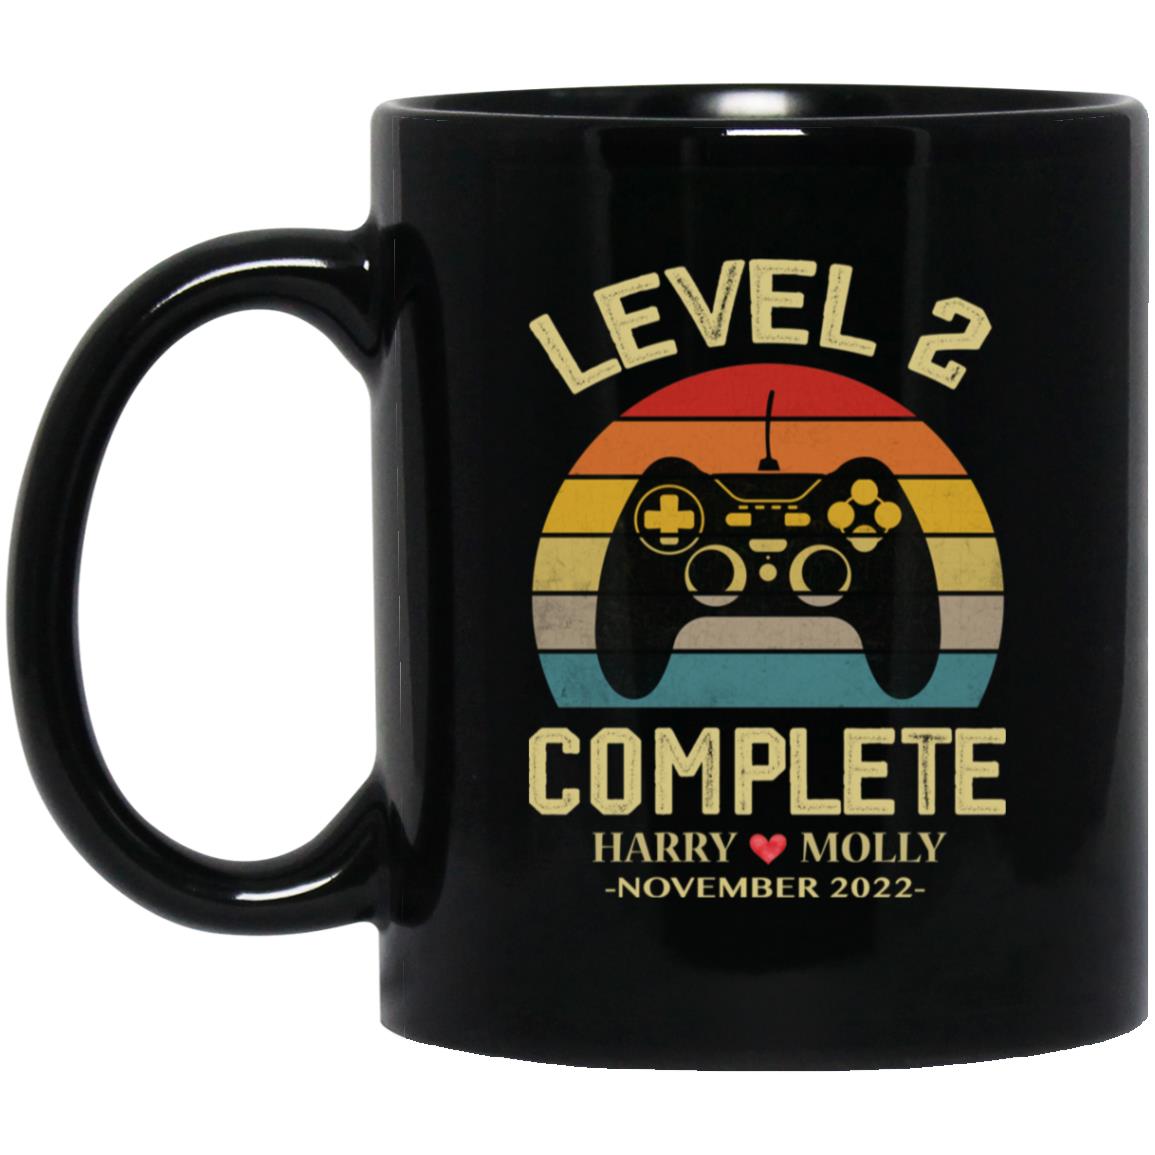 Personalized Anniversary Gift Mug For Husband Wife - Retro Gamer Customized Mug